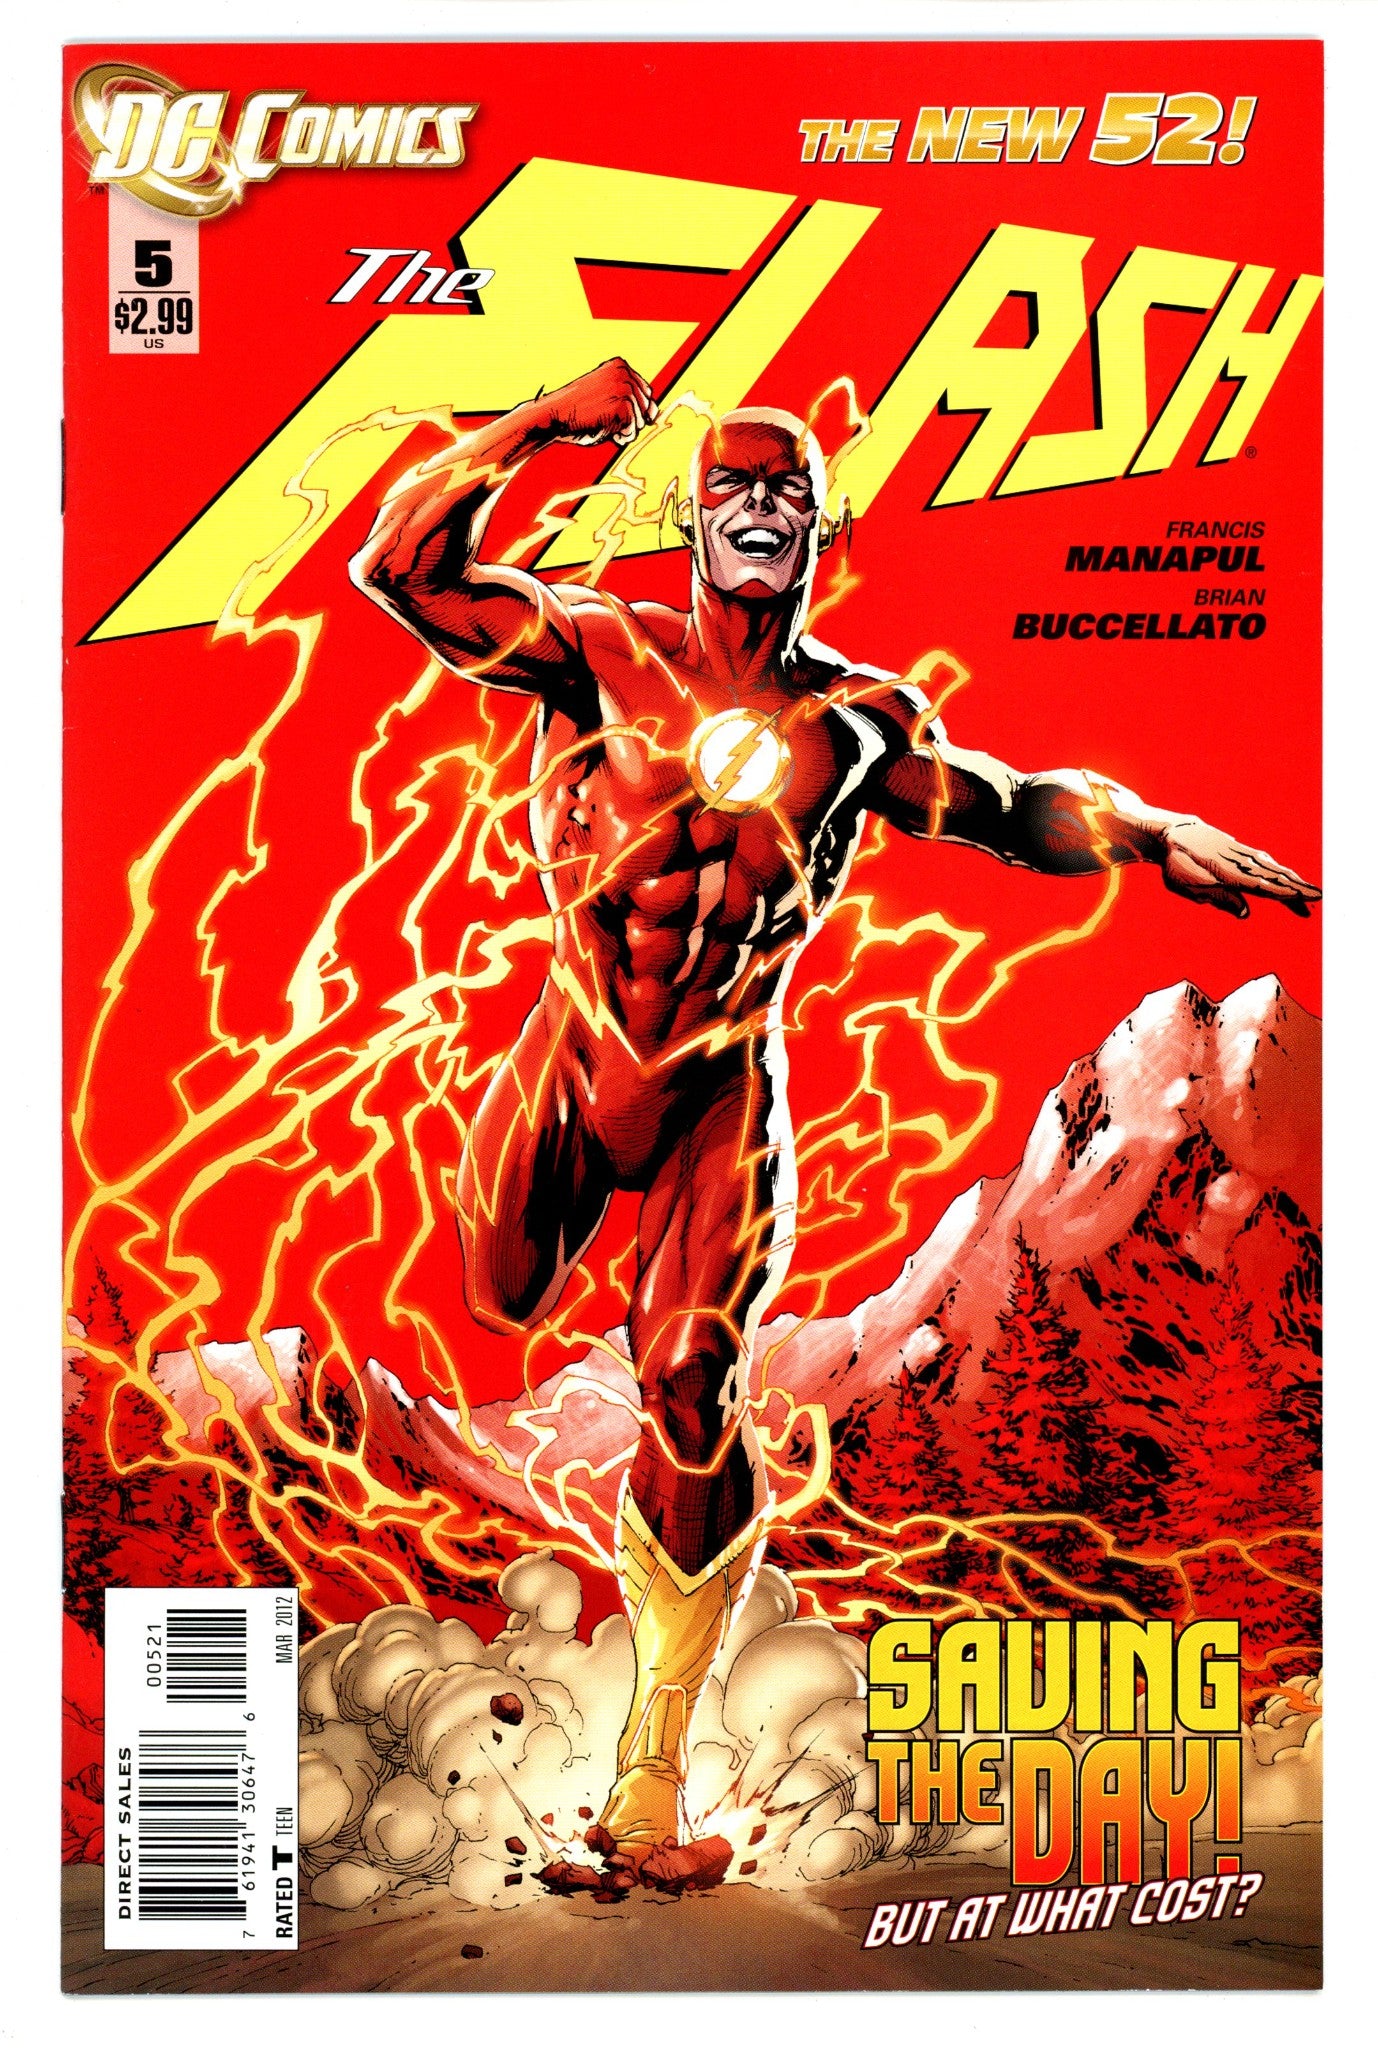 The Flash Vol 4 5 VF+ (8.5) (2012) Frank Variant 